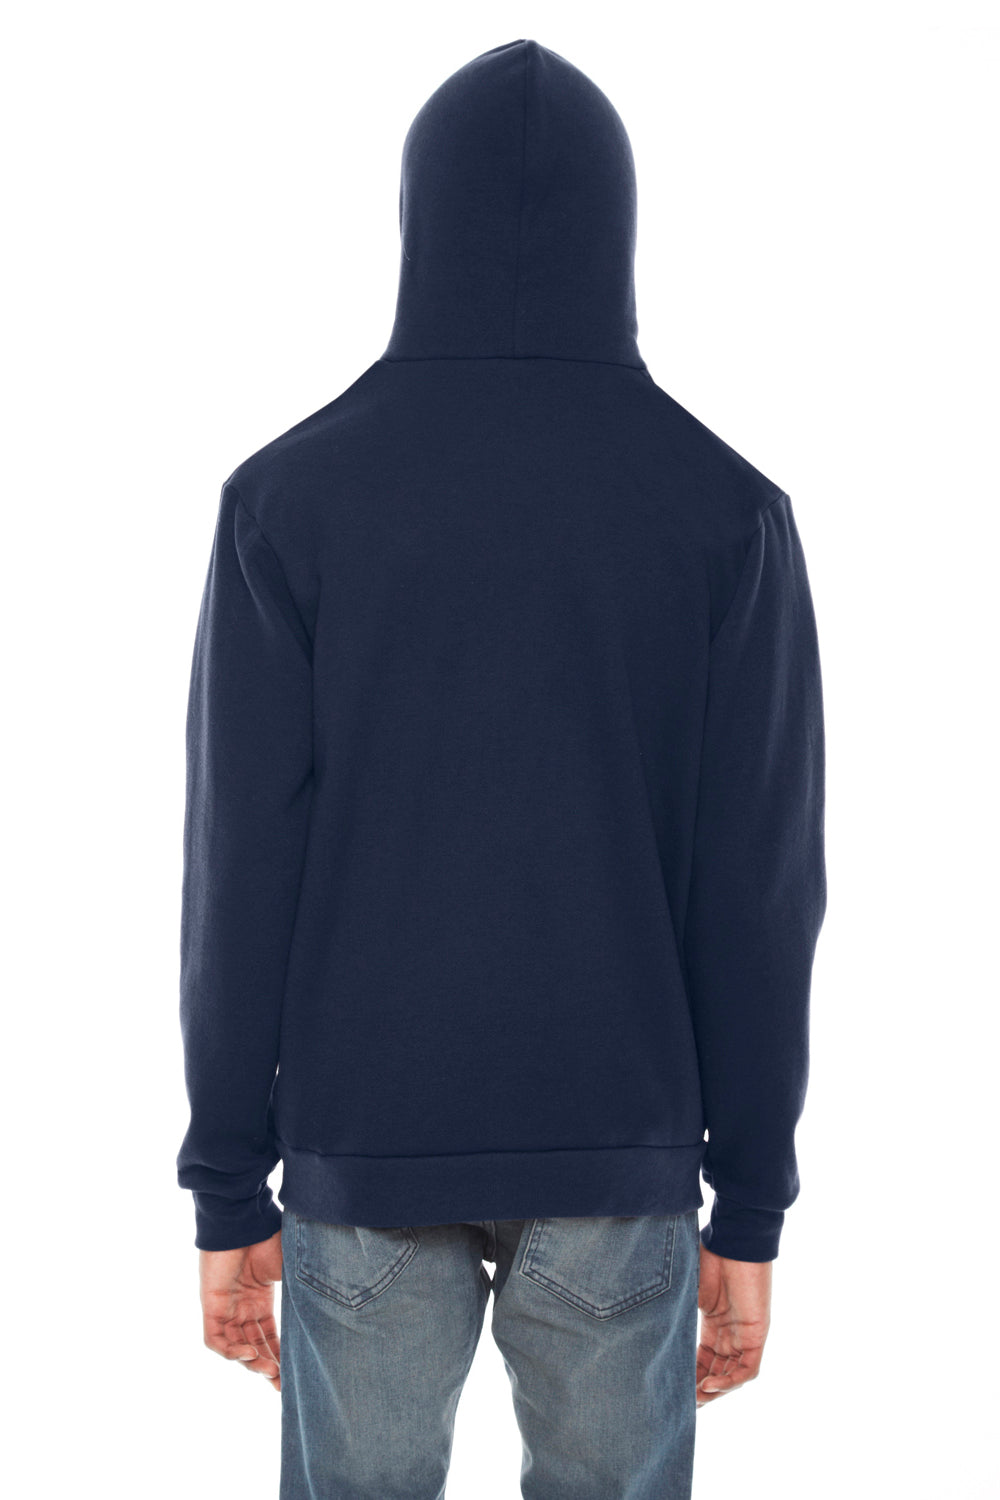 American Apparel F497W Mens Flex Fleece Full Zip Hooded Sweatshirt Hoodie Navy Blue Back